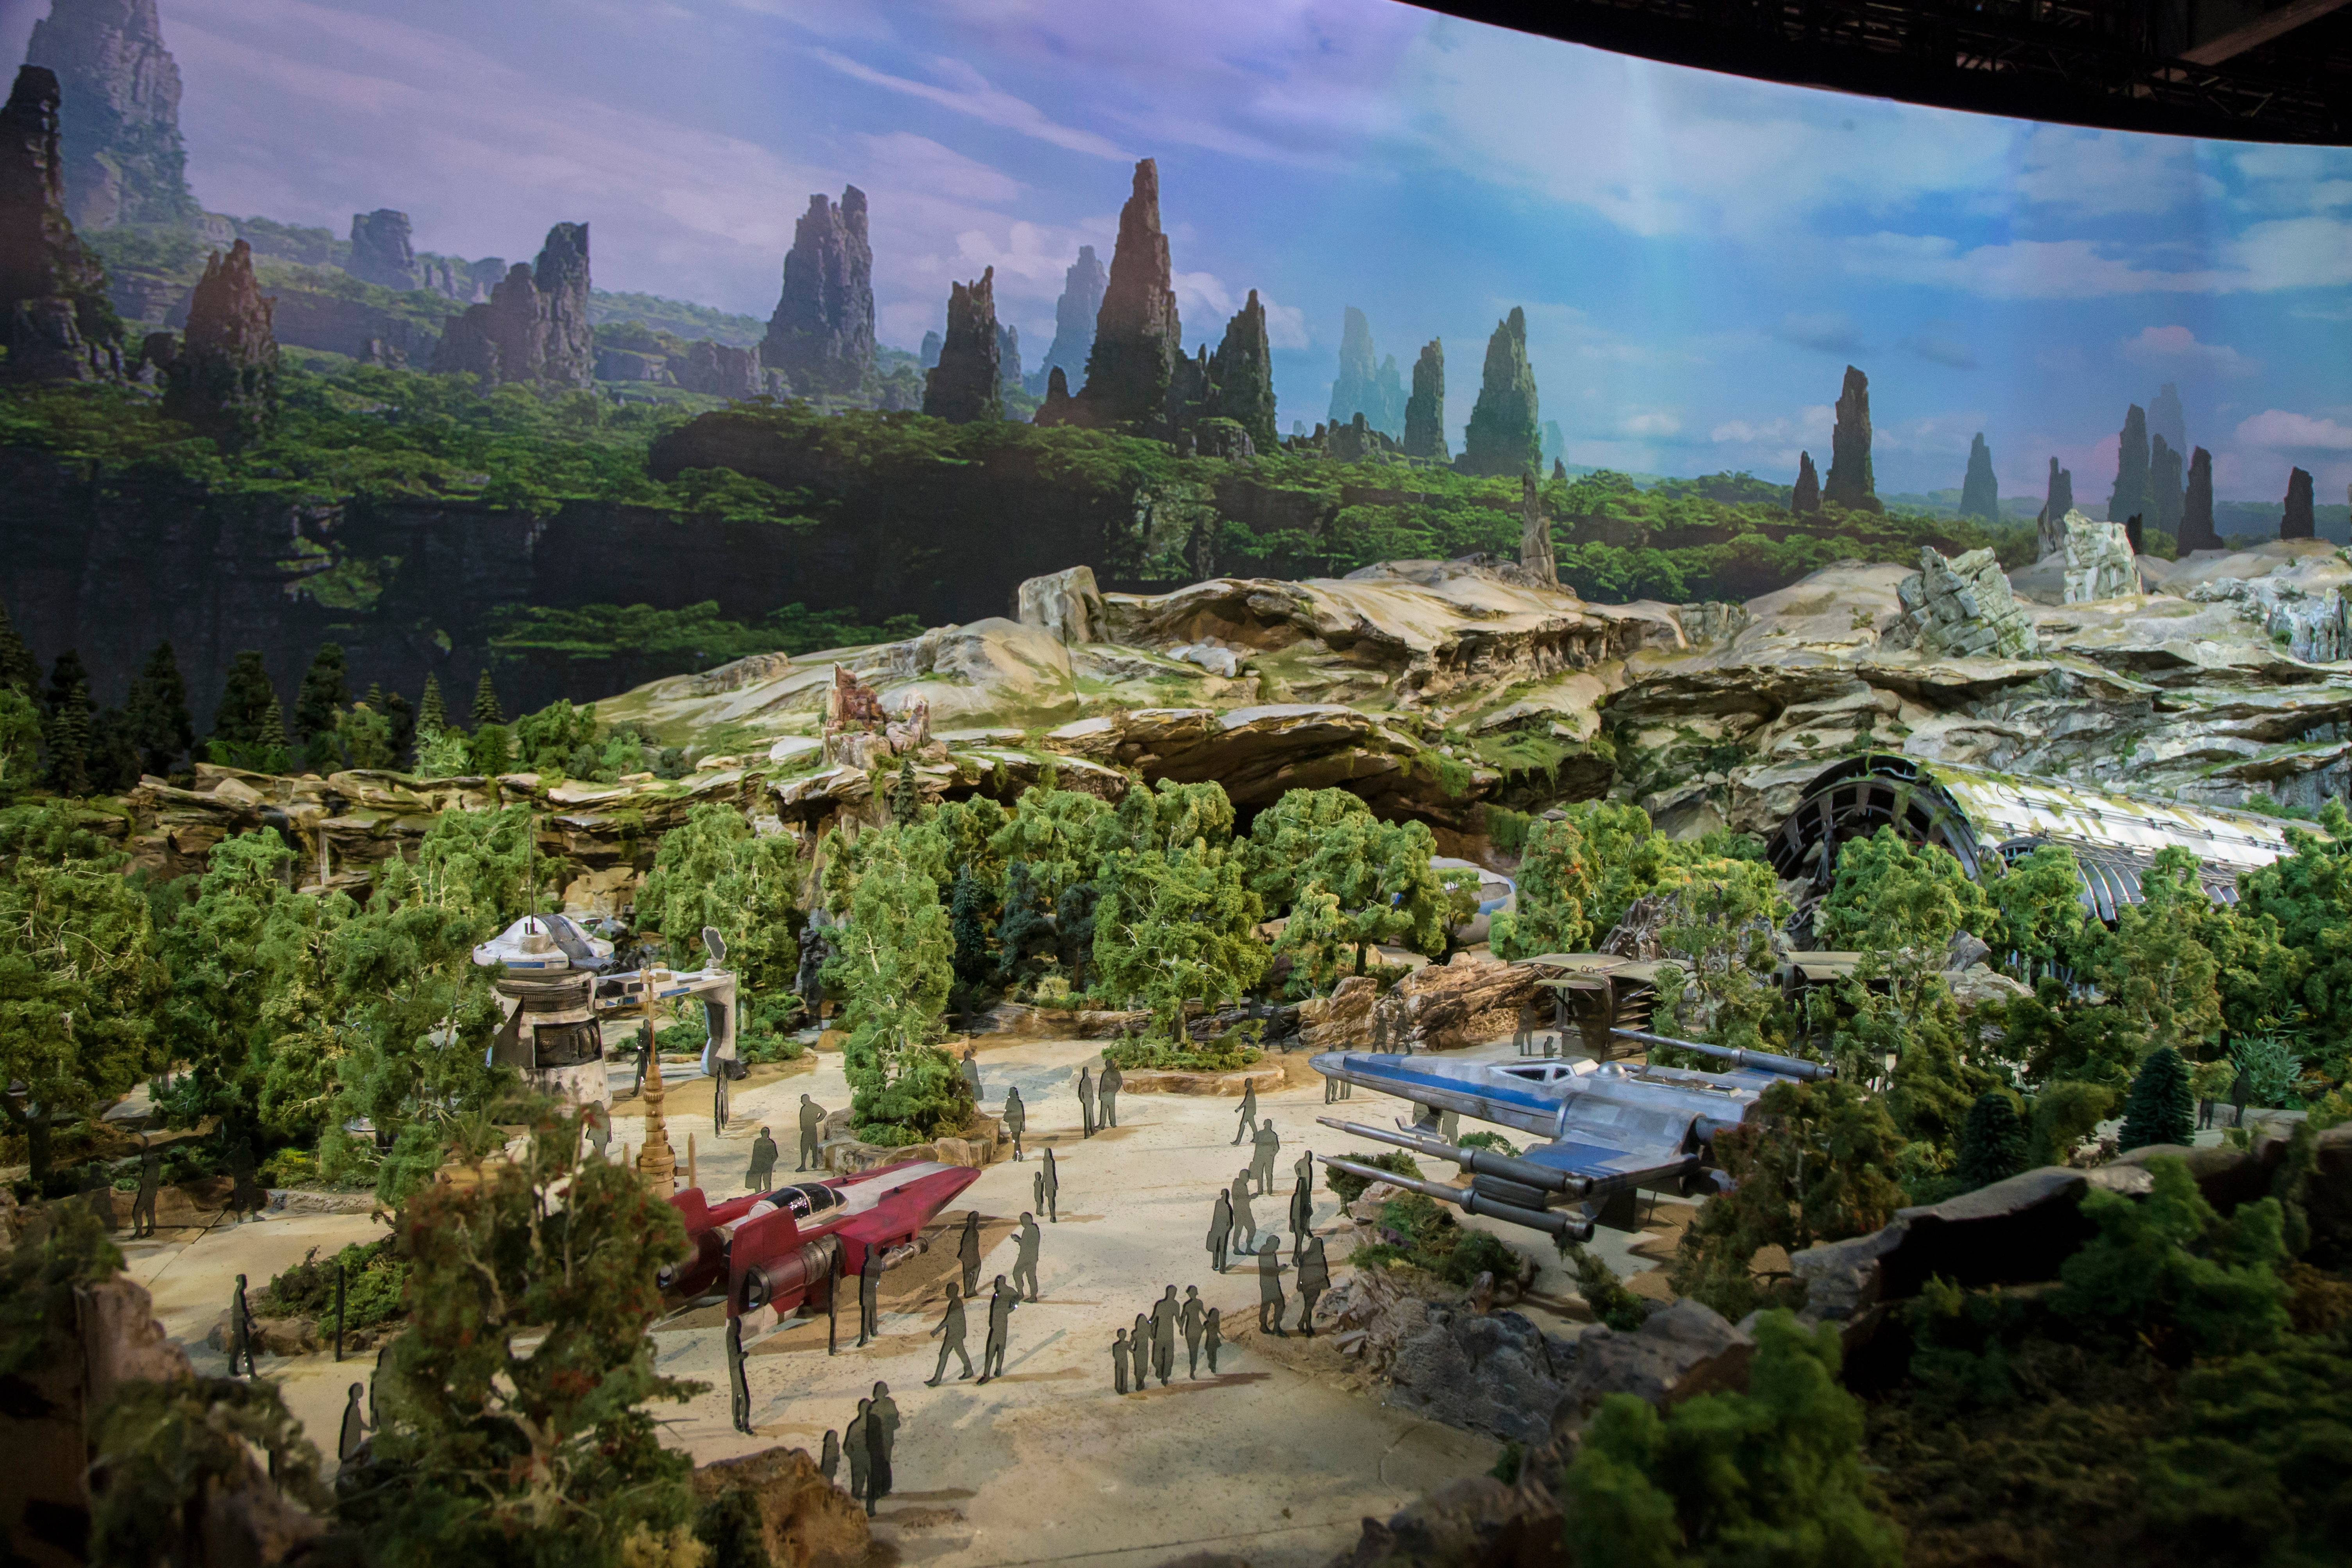 Star Wars Land model in detail